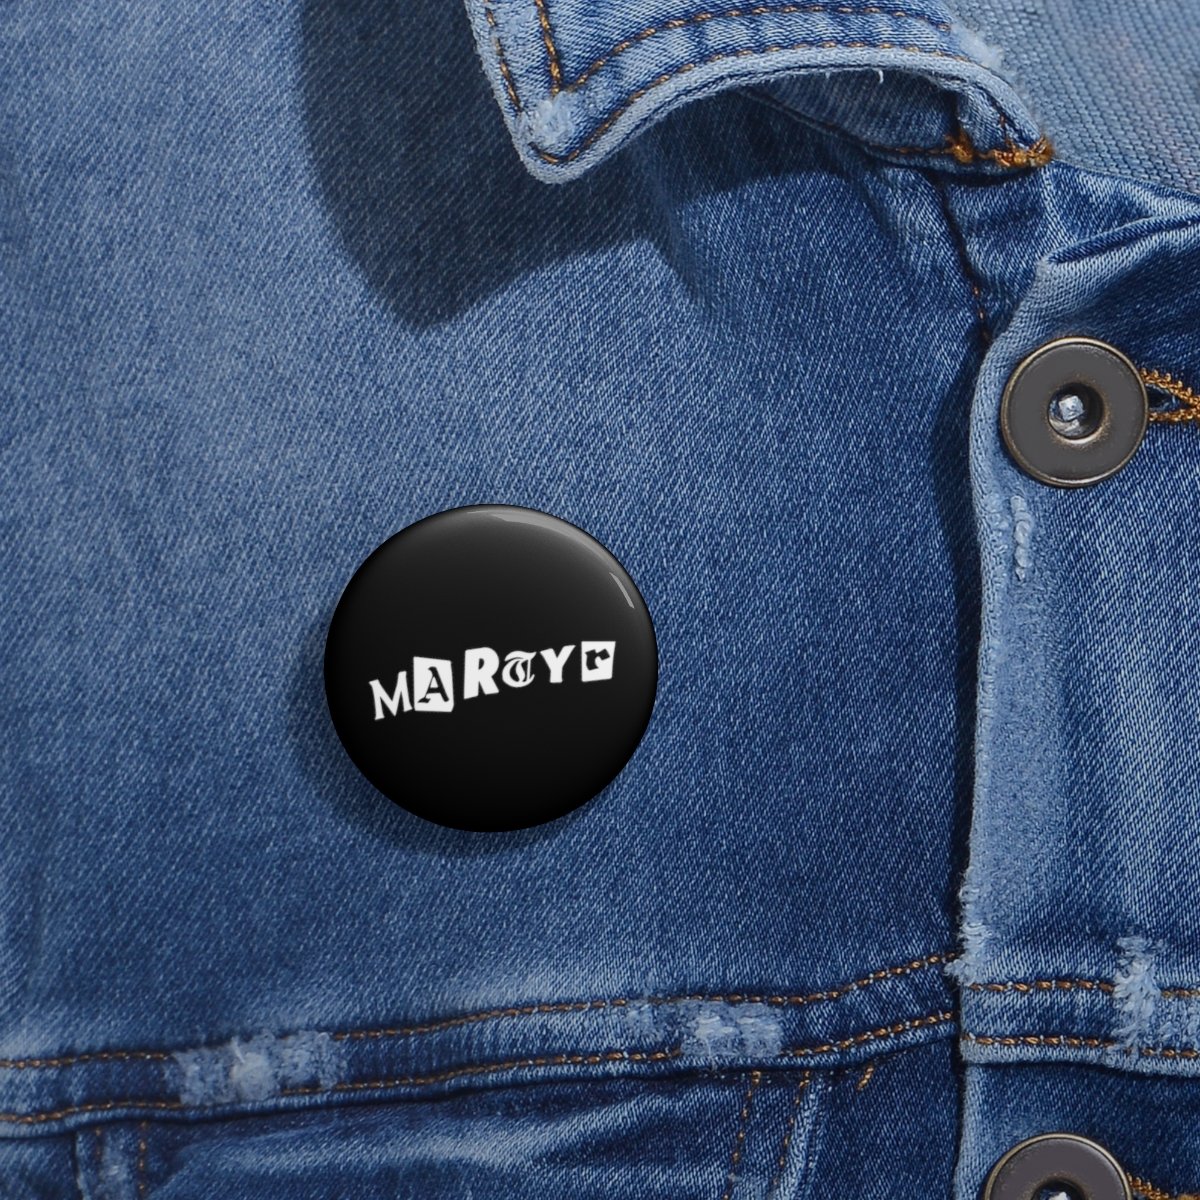 Martyr Ransom Logo Pin Buttons